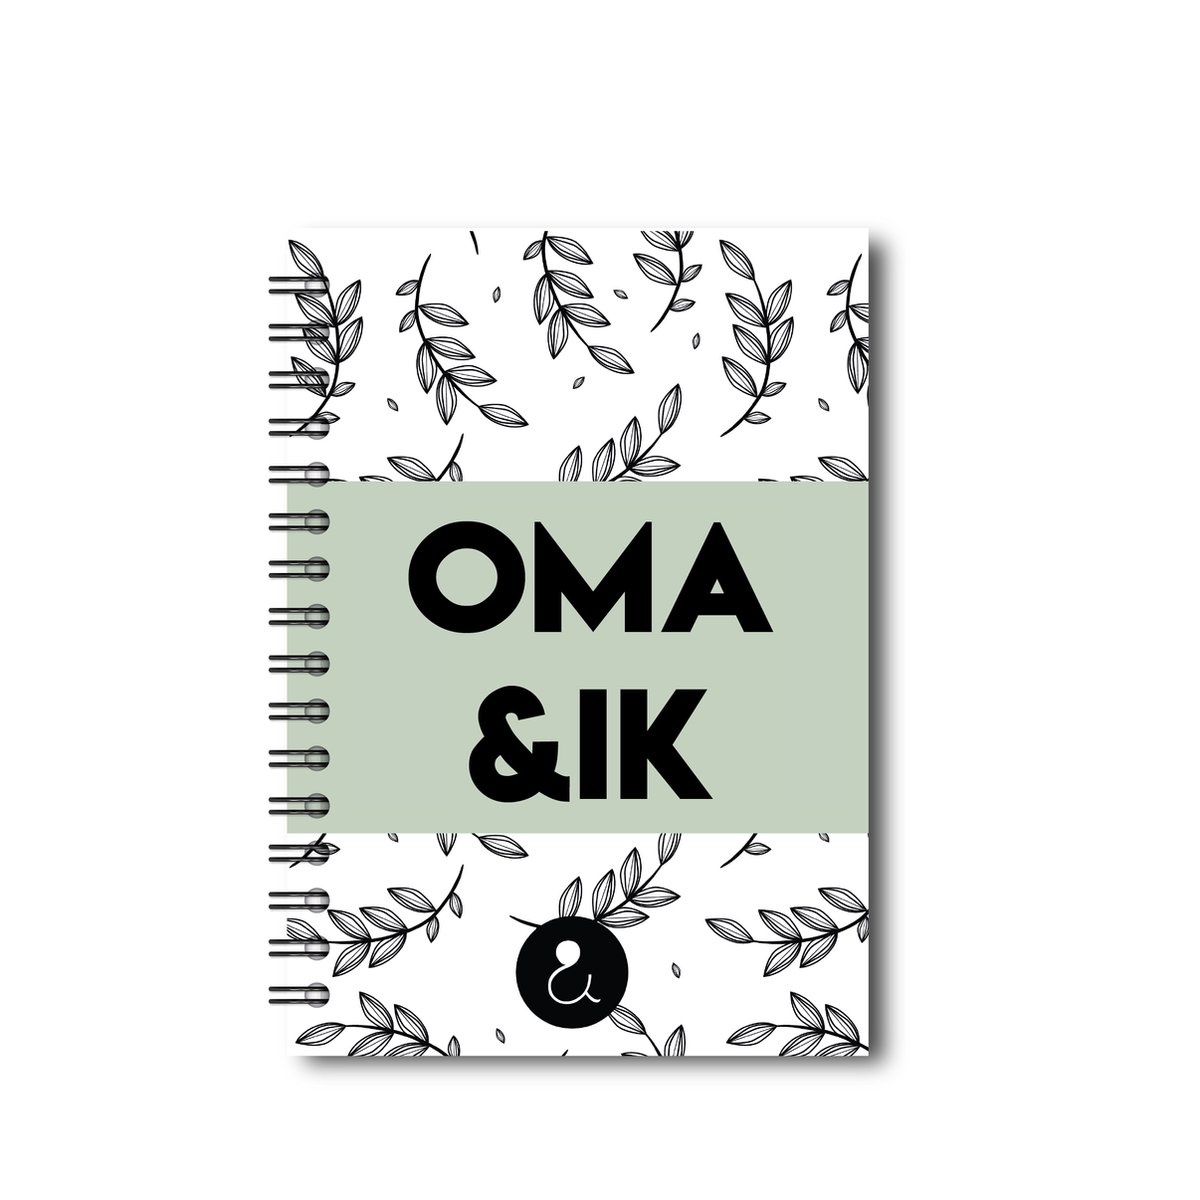 Studio Ins & Outs Invulboek 'Oma & ik' - Groen